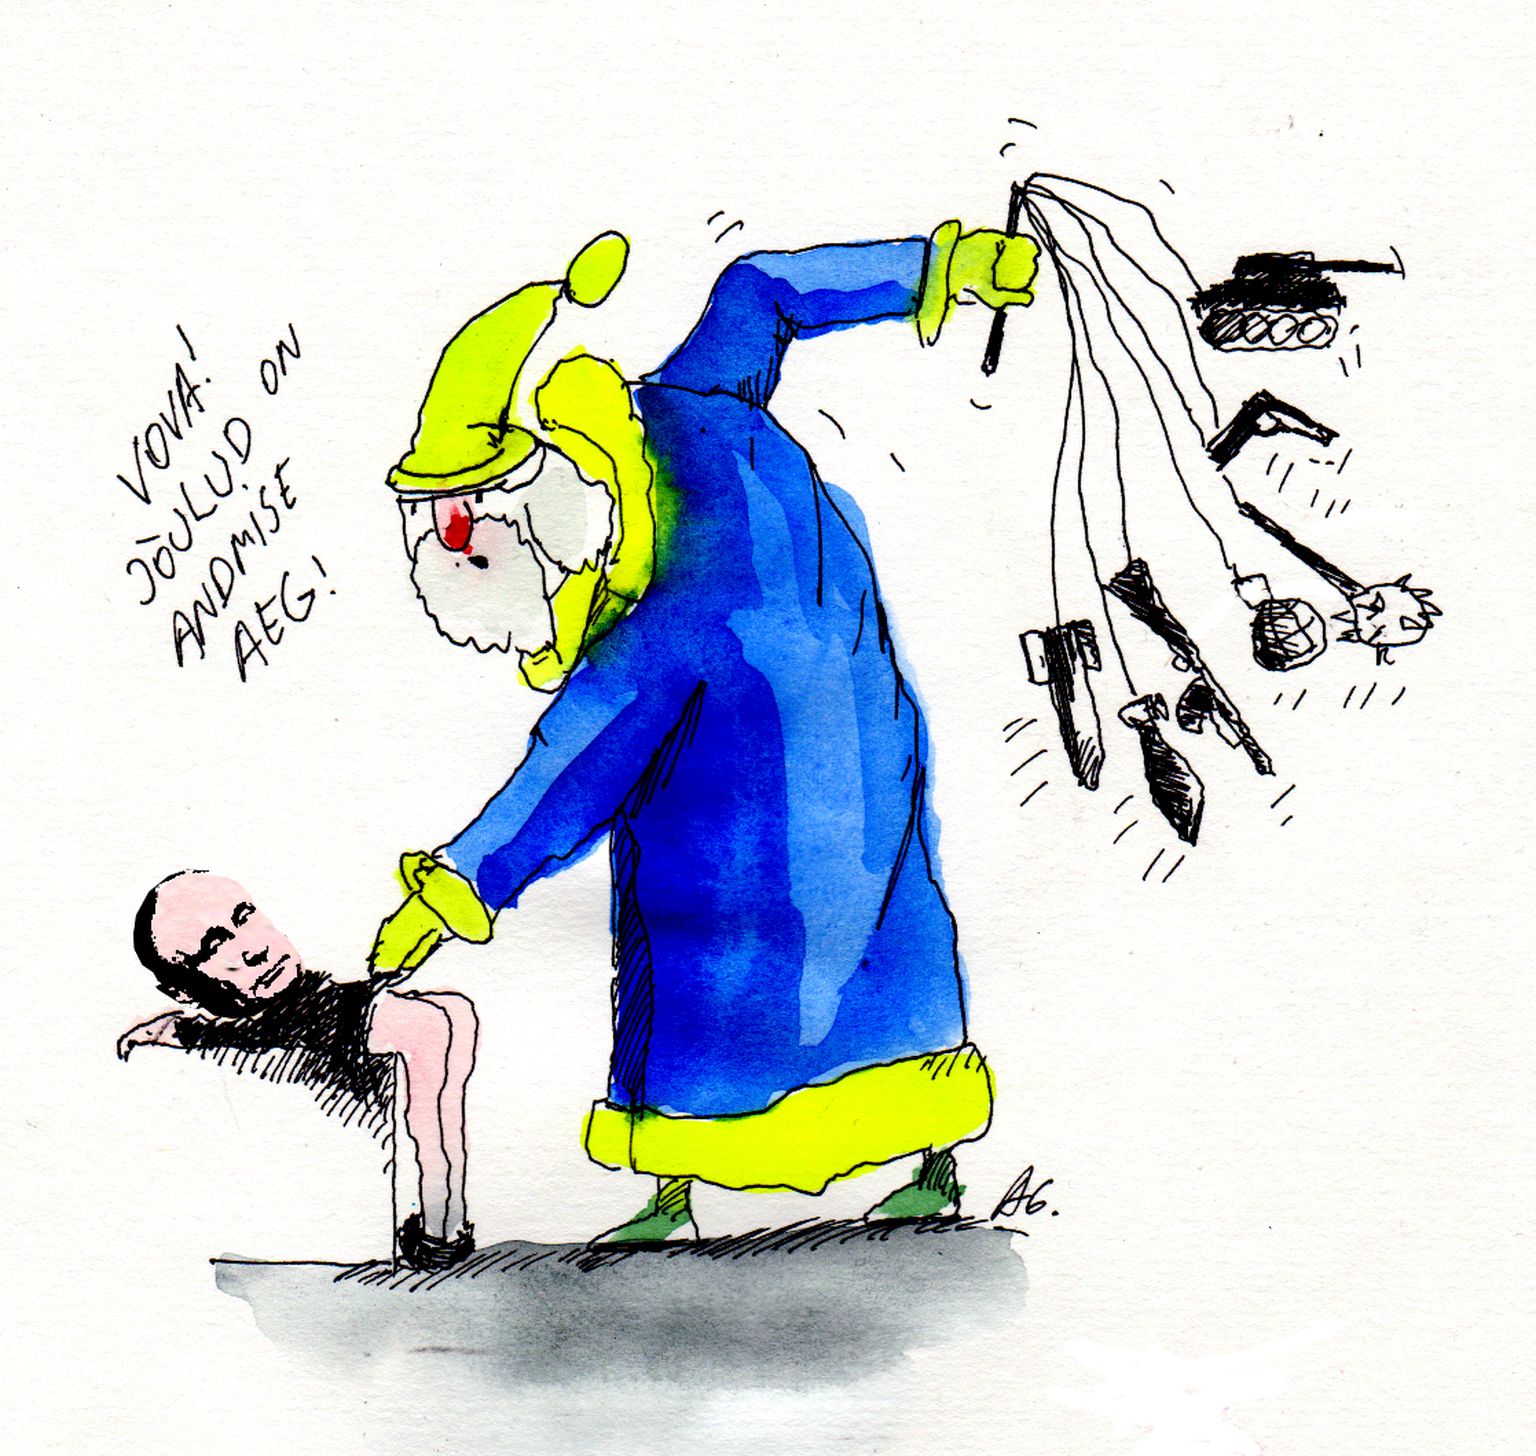 Карикатура на Путина, которого наказывает Дед Мороз.